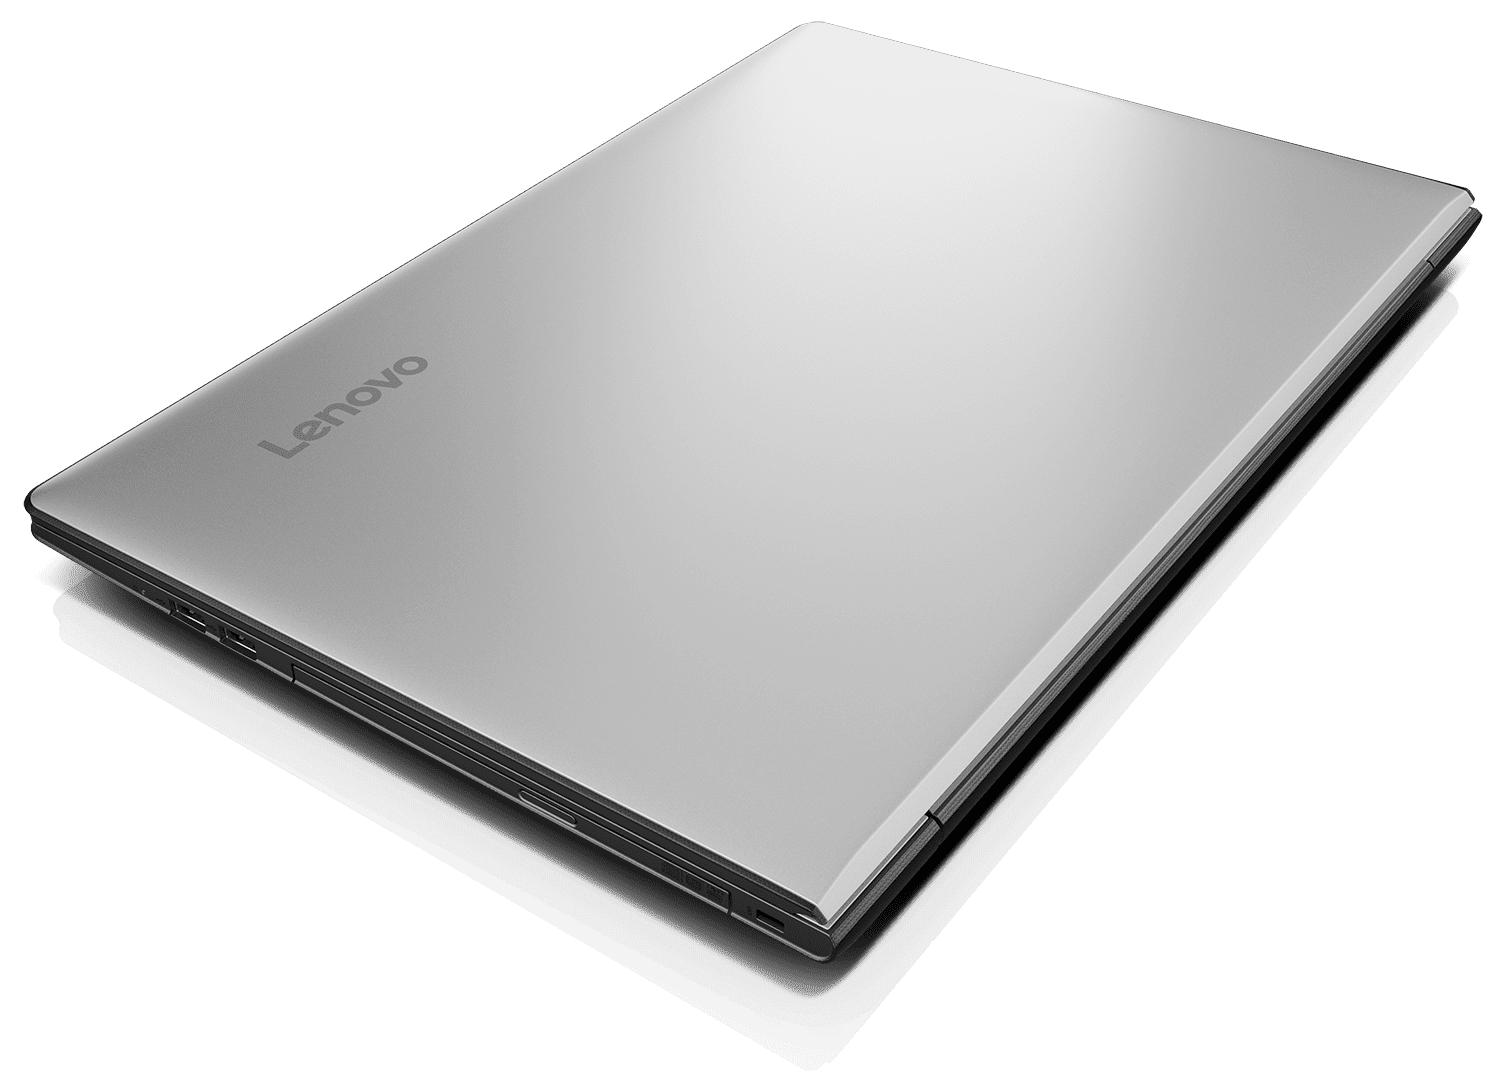 Ноутбук Lenovo 310 15isk Цена